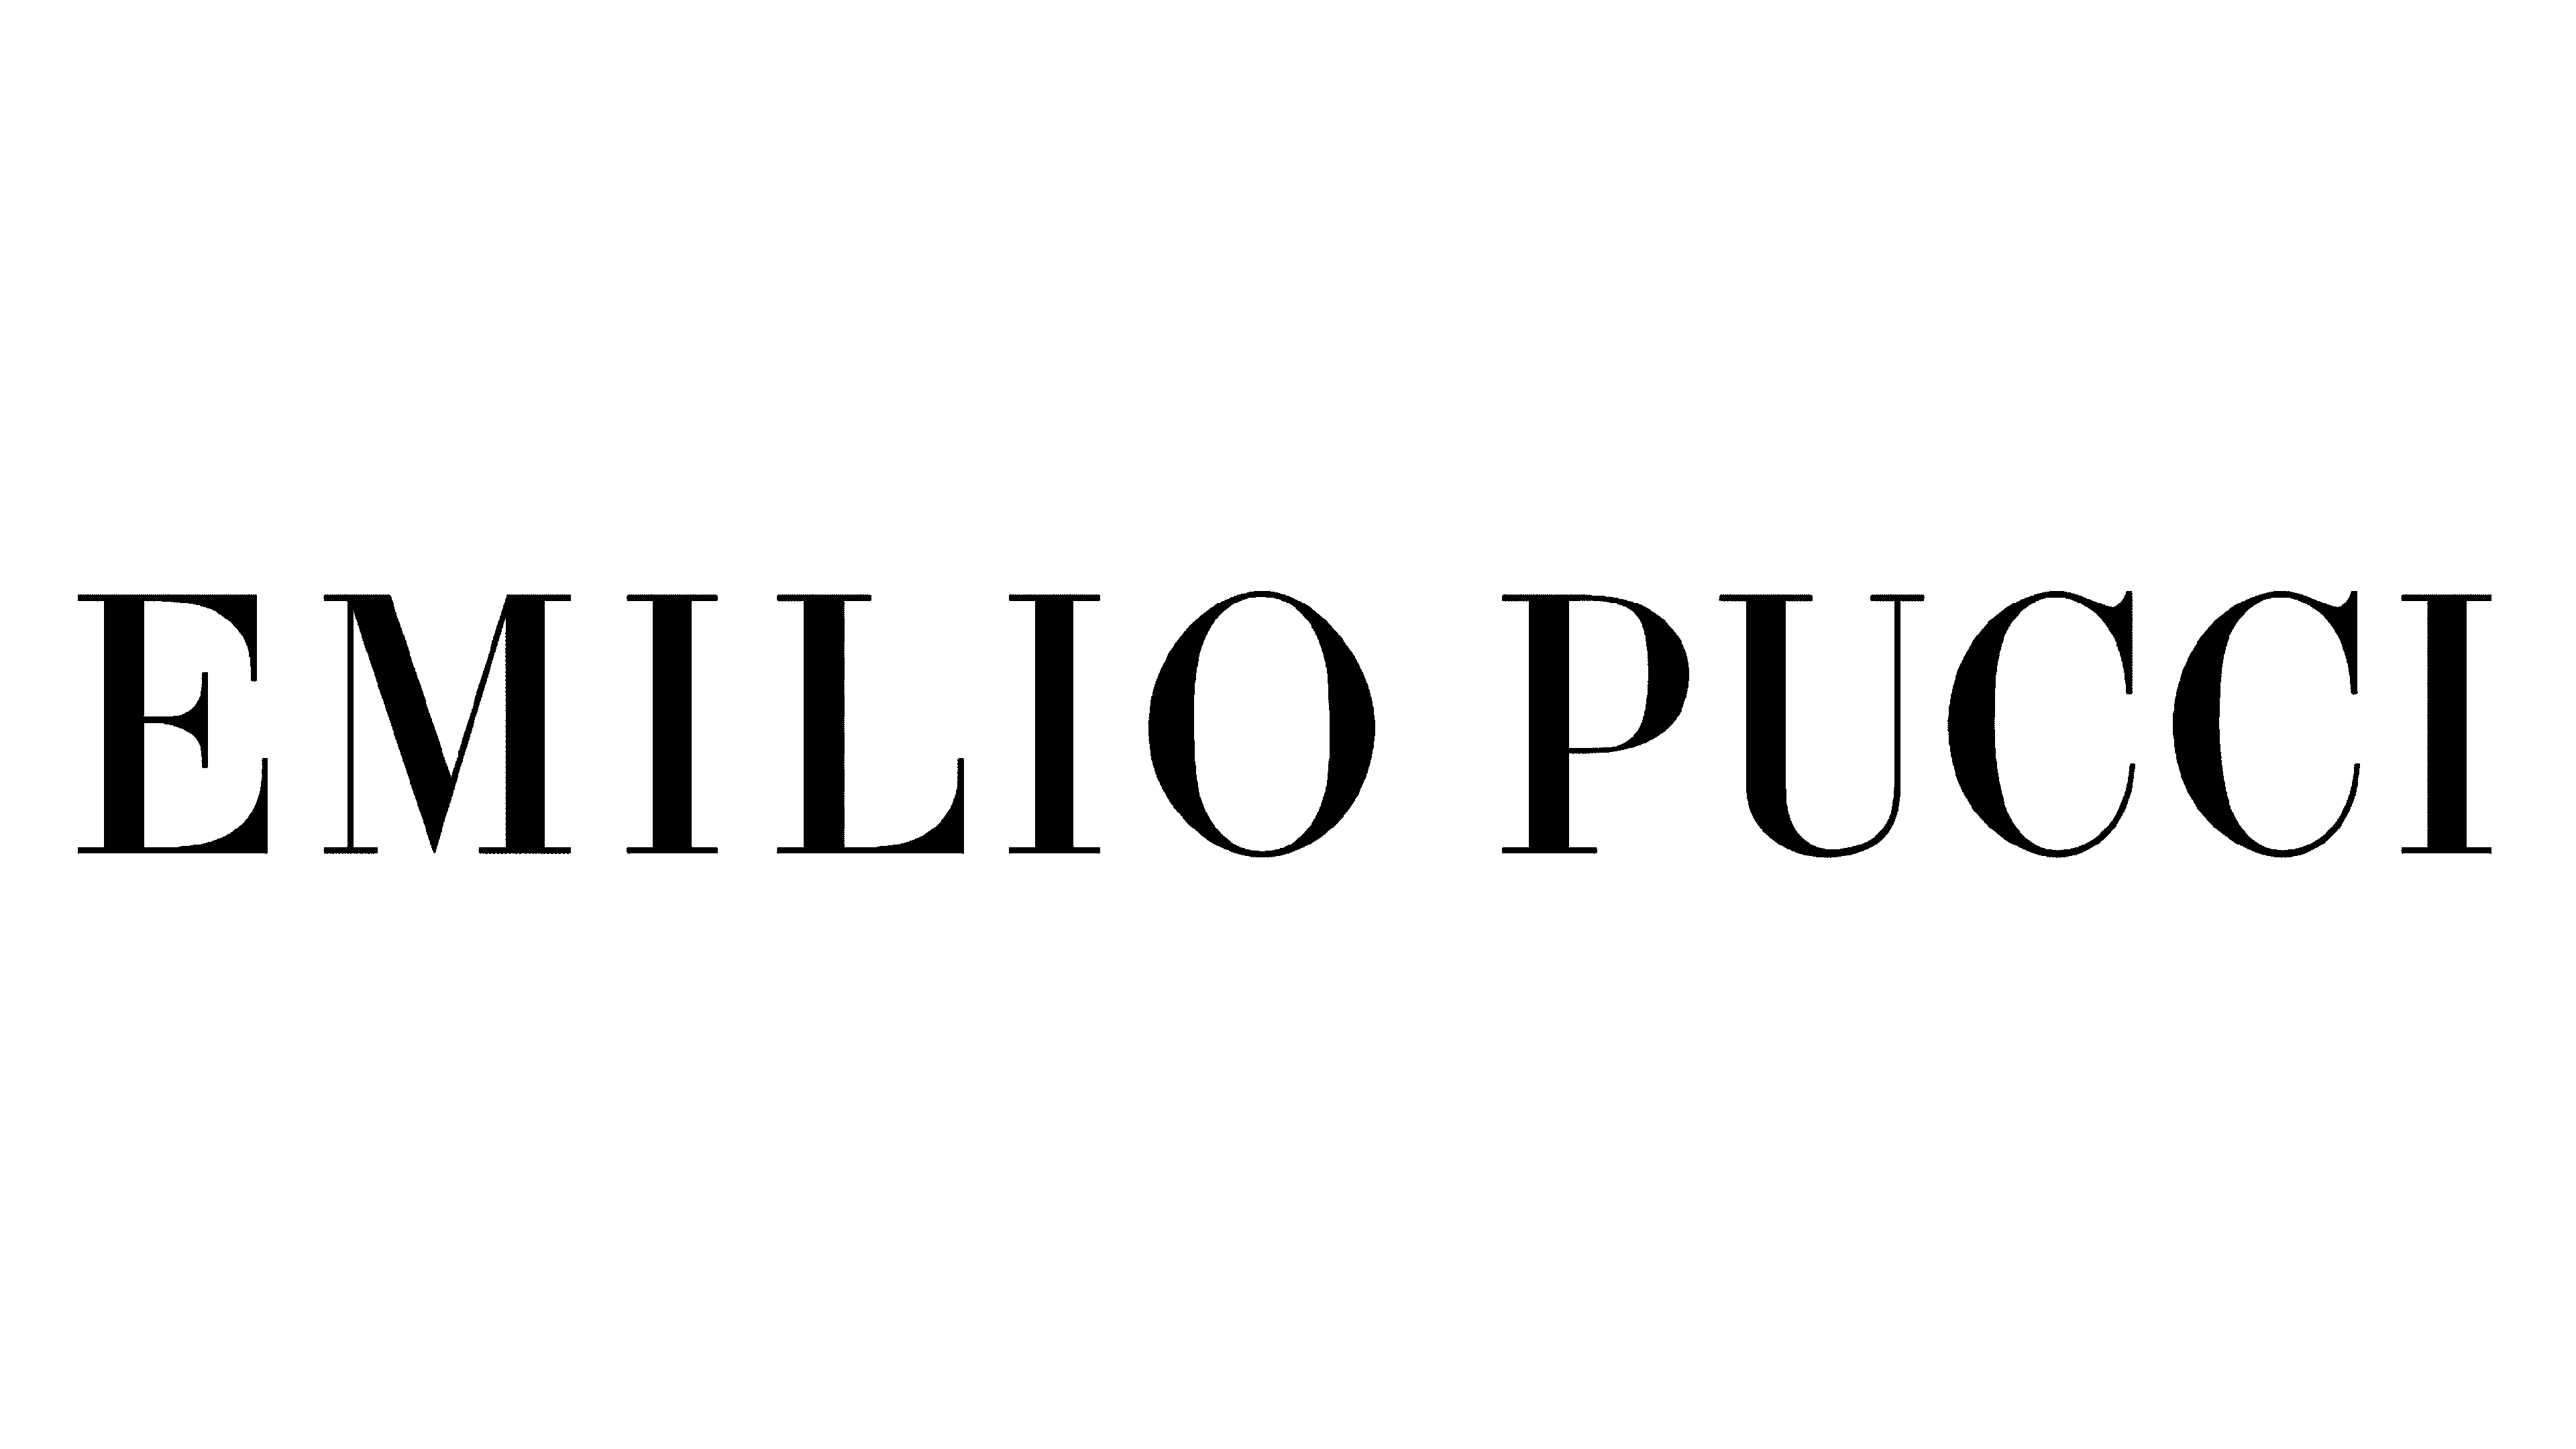 Emilio Pucci Contemporary history, brand identity, Brand image, and Brand  equity – pilikabobolinabebeludo